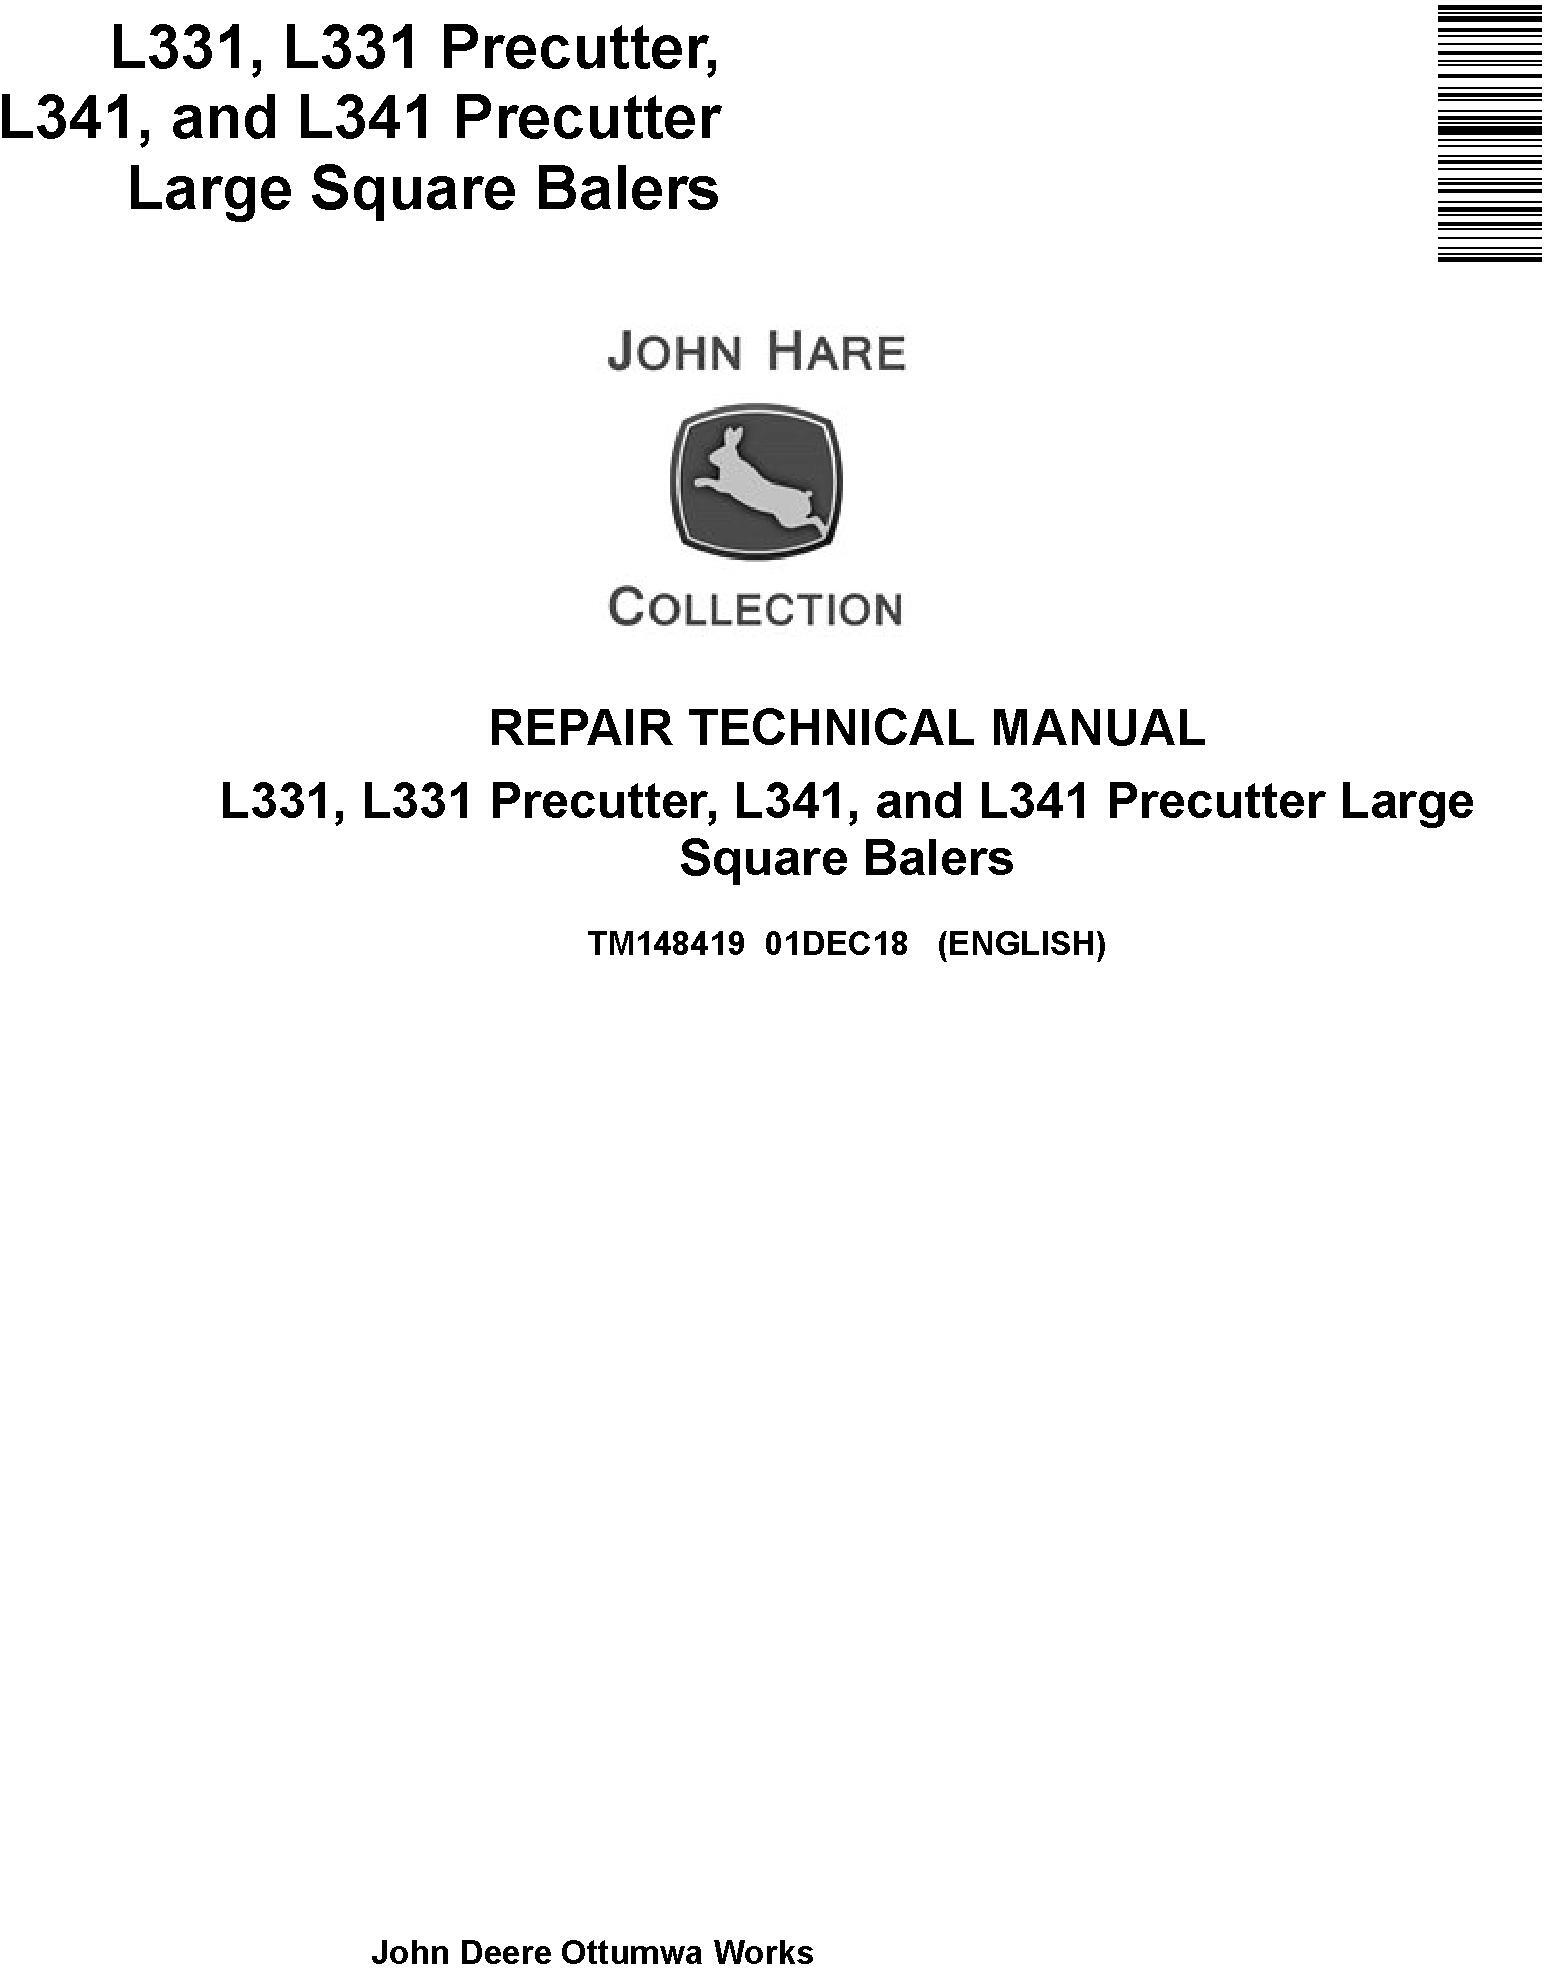 JD John Deere L331/Precutter, L341/ Precutter Large Square Balers Repair Technical Manual (TM148419)